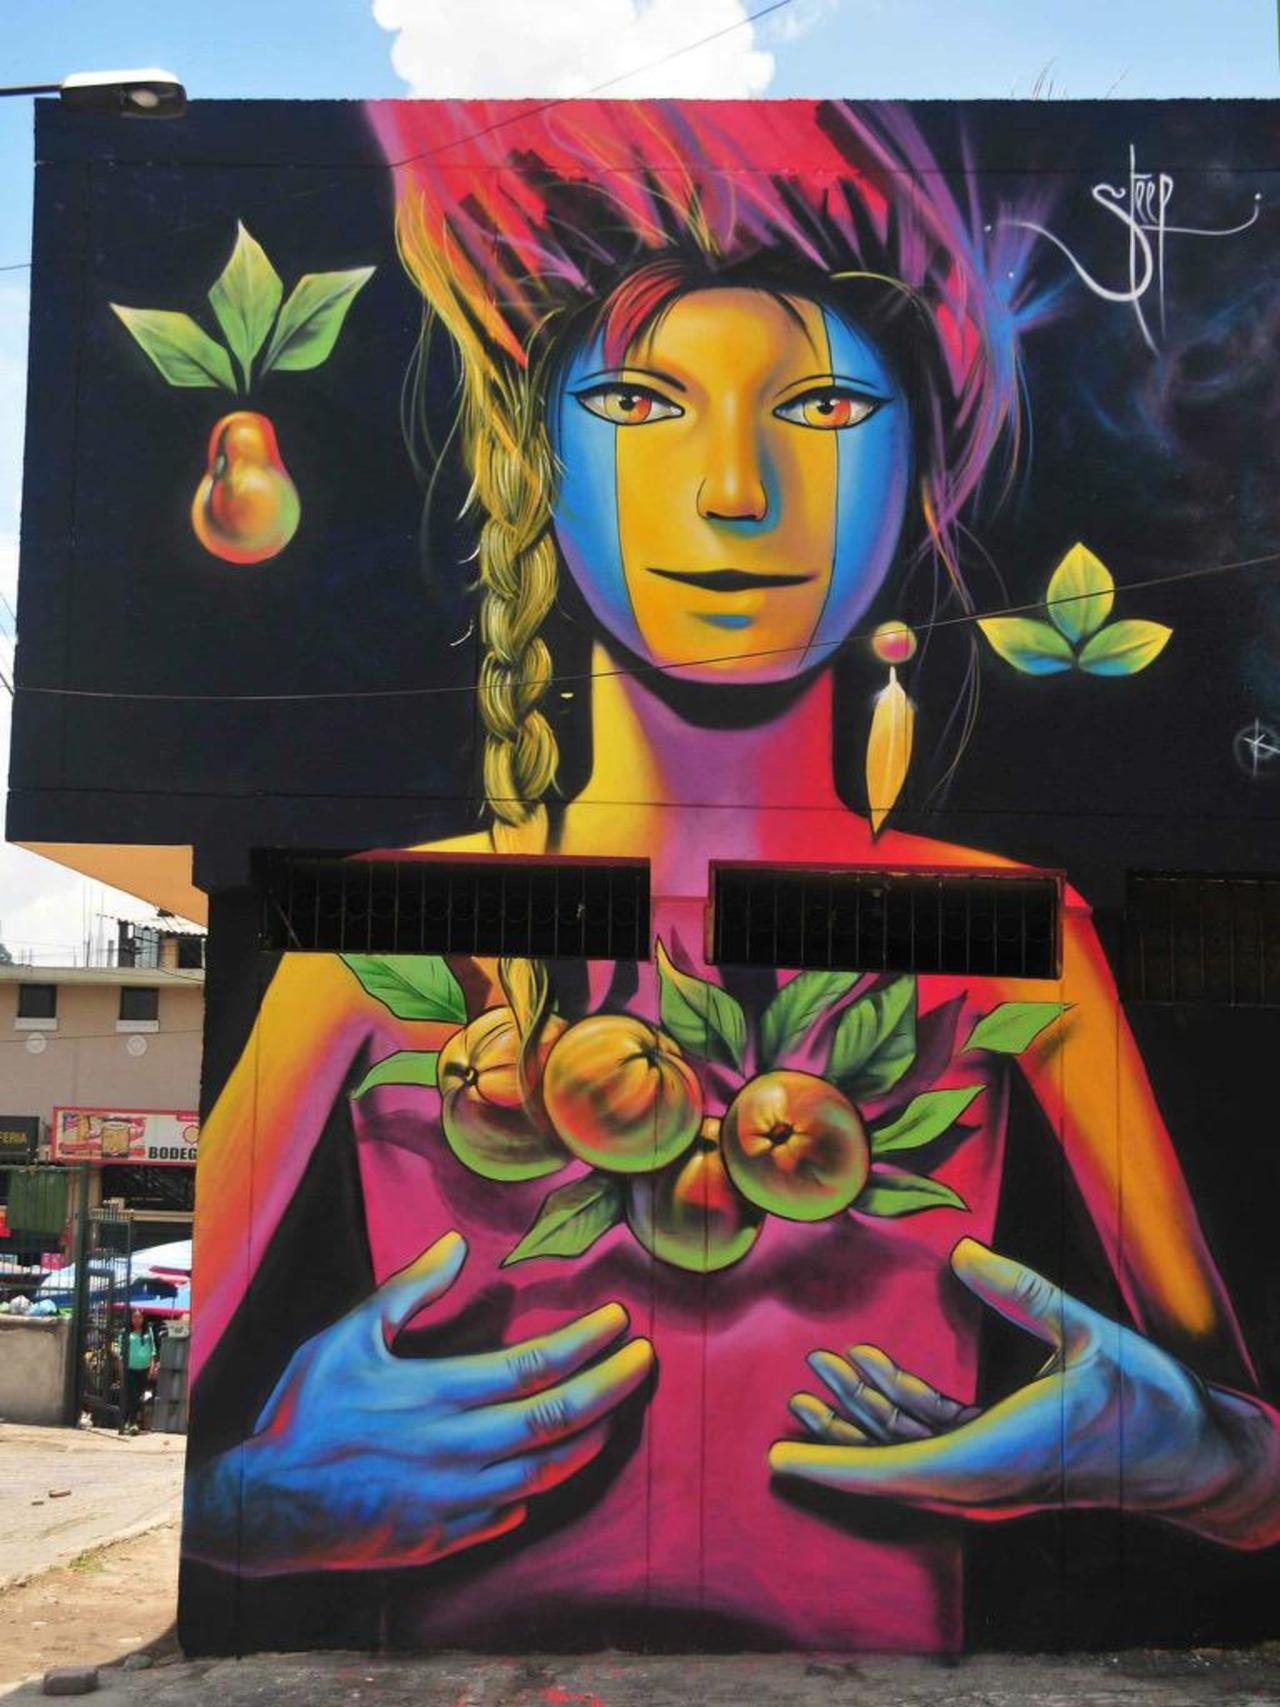 RT @artlife365: Street Art by Steep

#art #graffiti #mural #streetart http://t.co/Jgsaj6FJRw